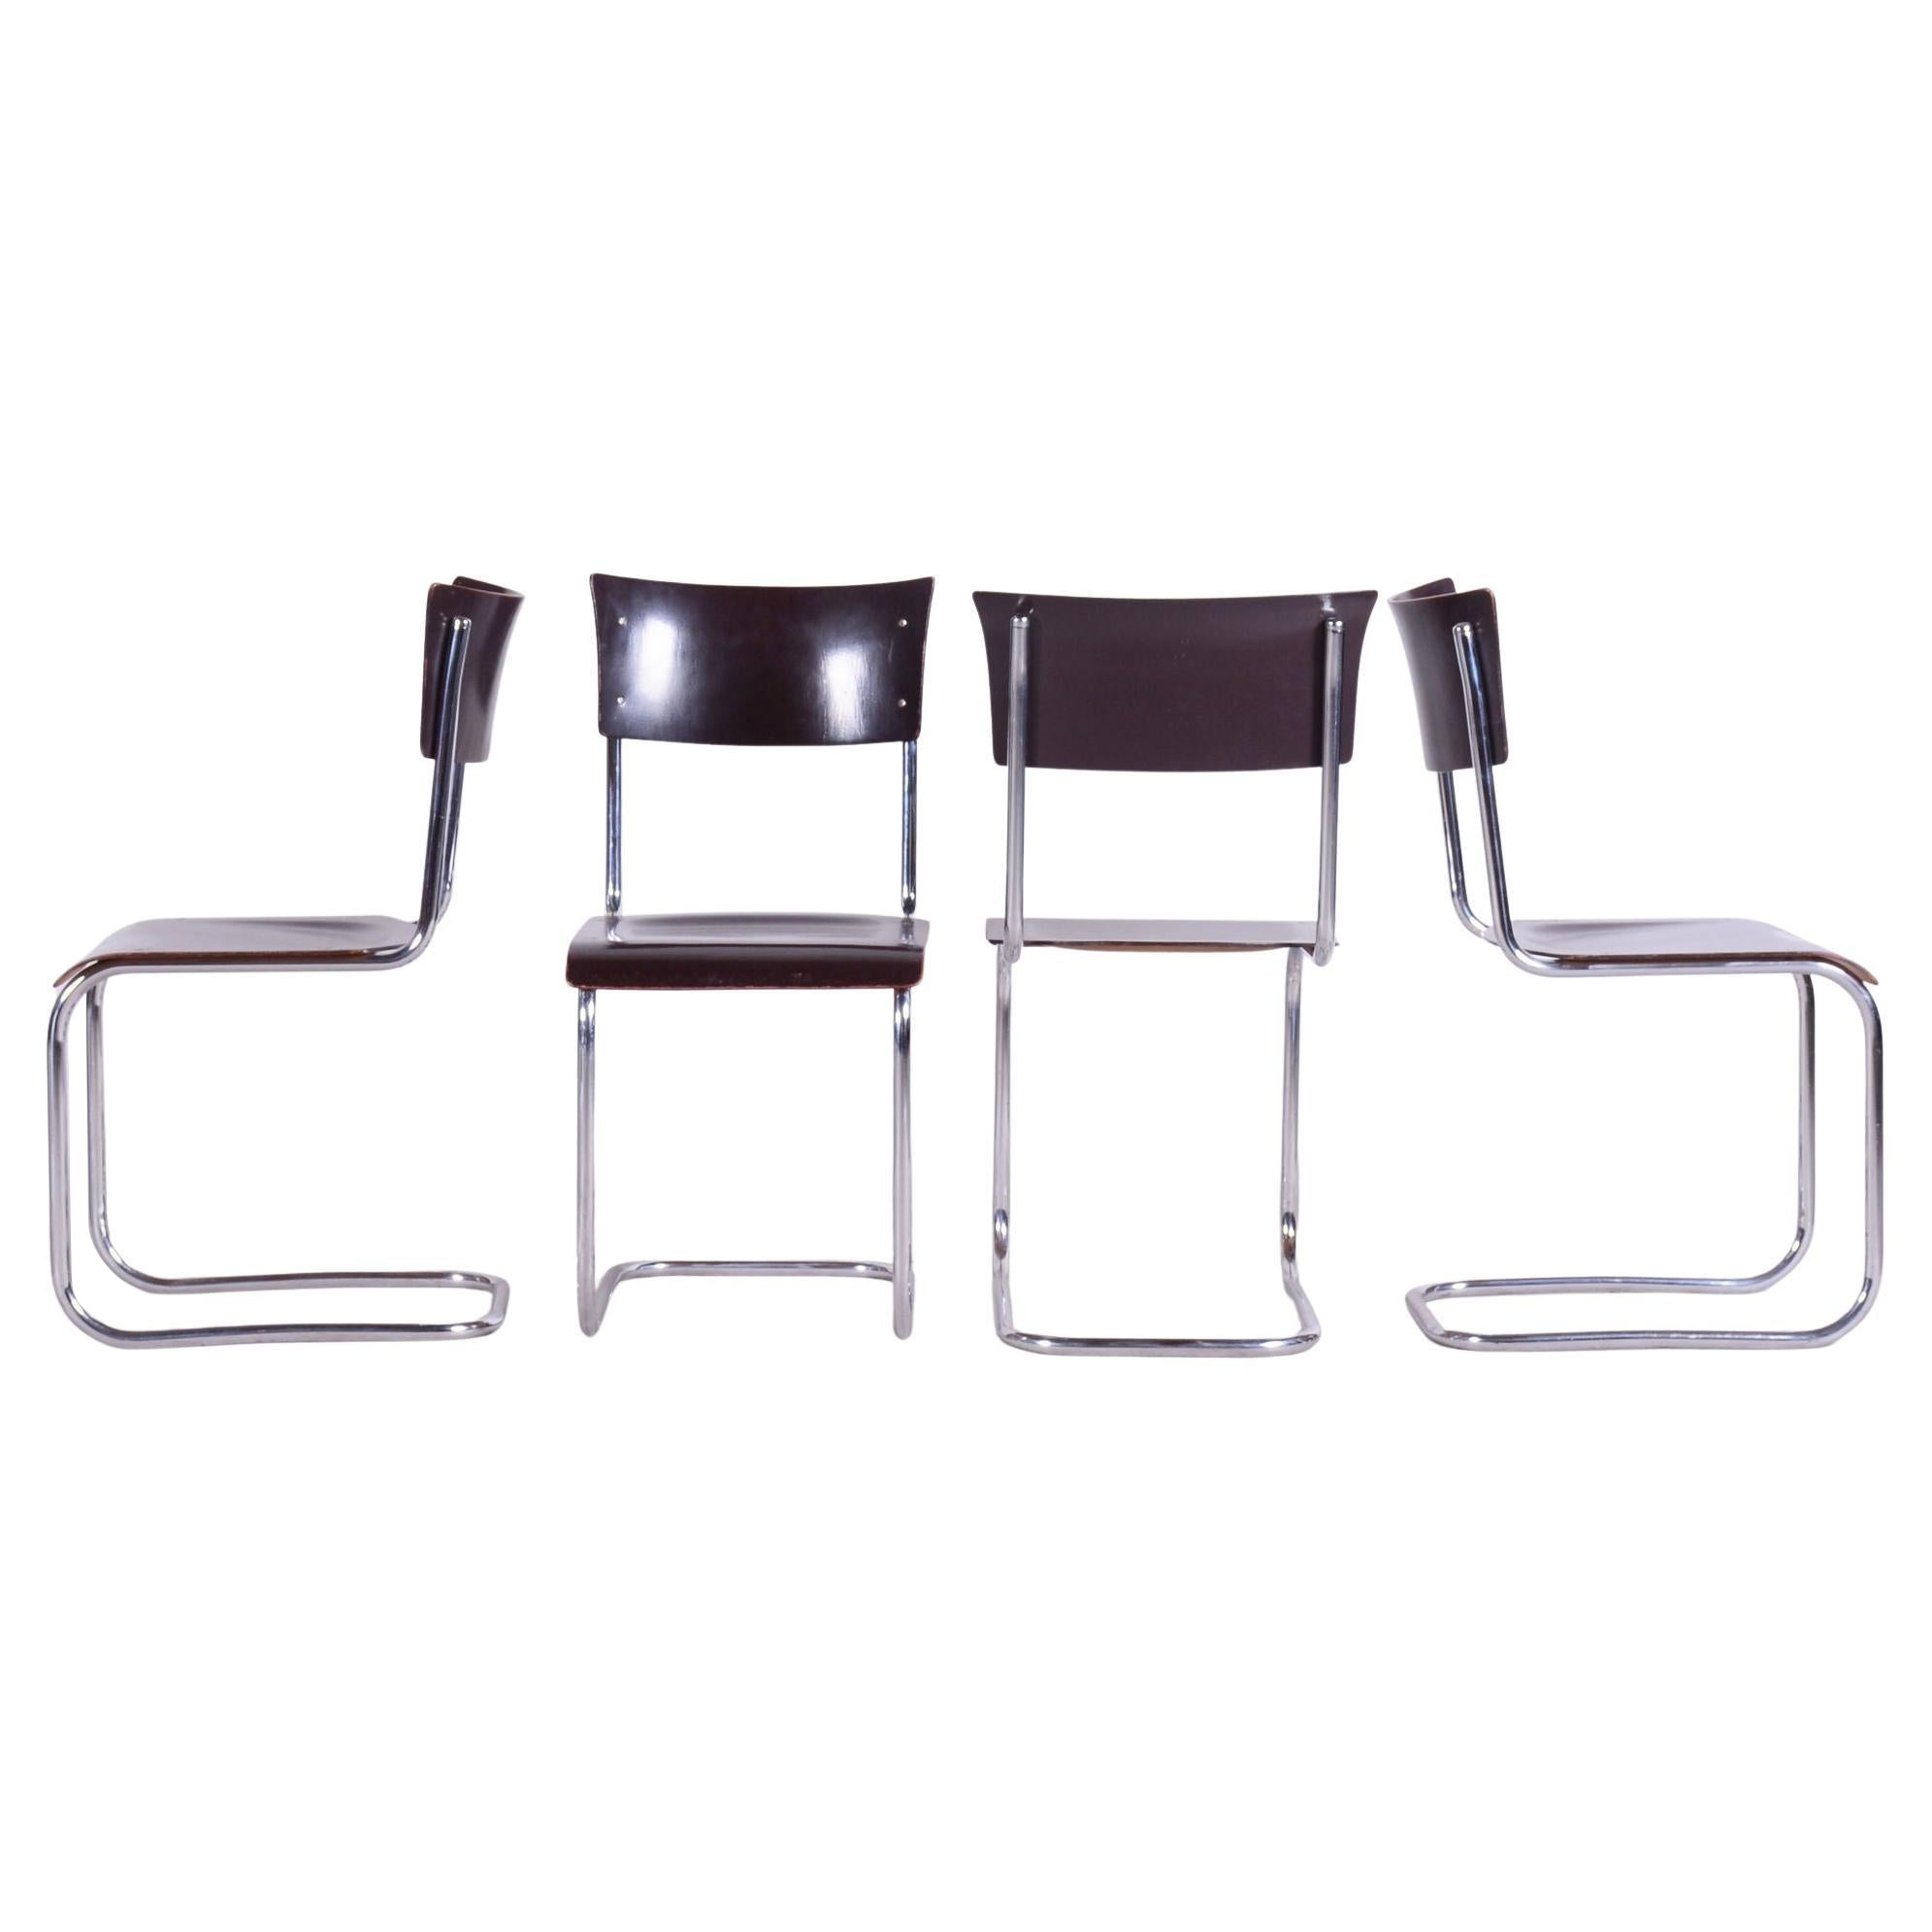 Set of 4 Restored Bauhaus Chairs, Mart Stam, Robert Slezak, Czechia, 1930s For Sale